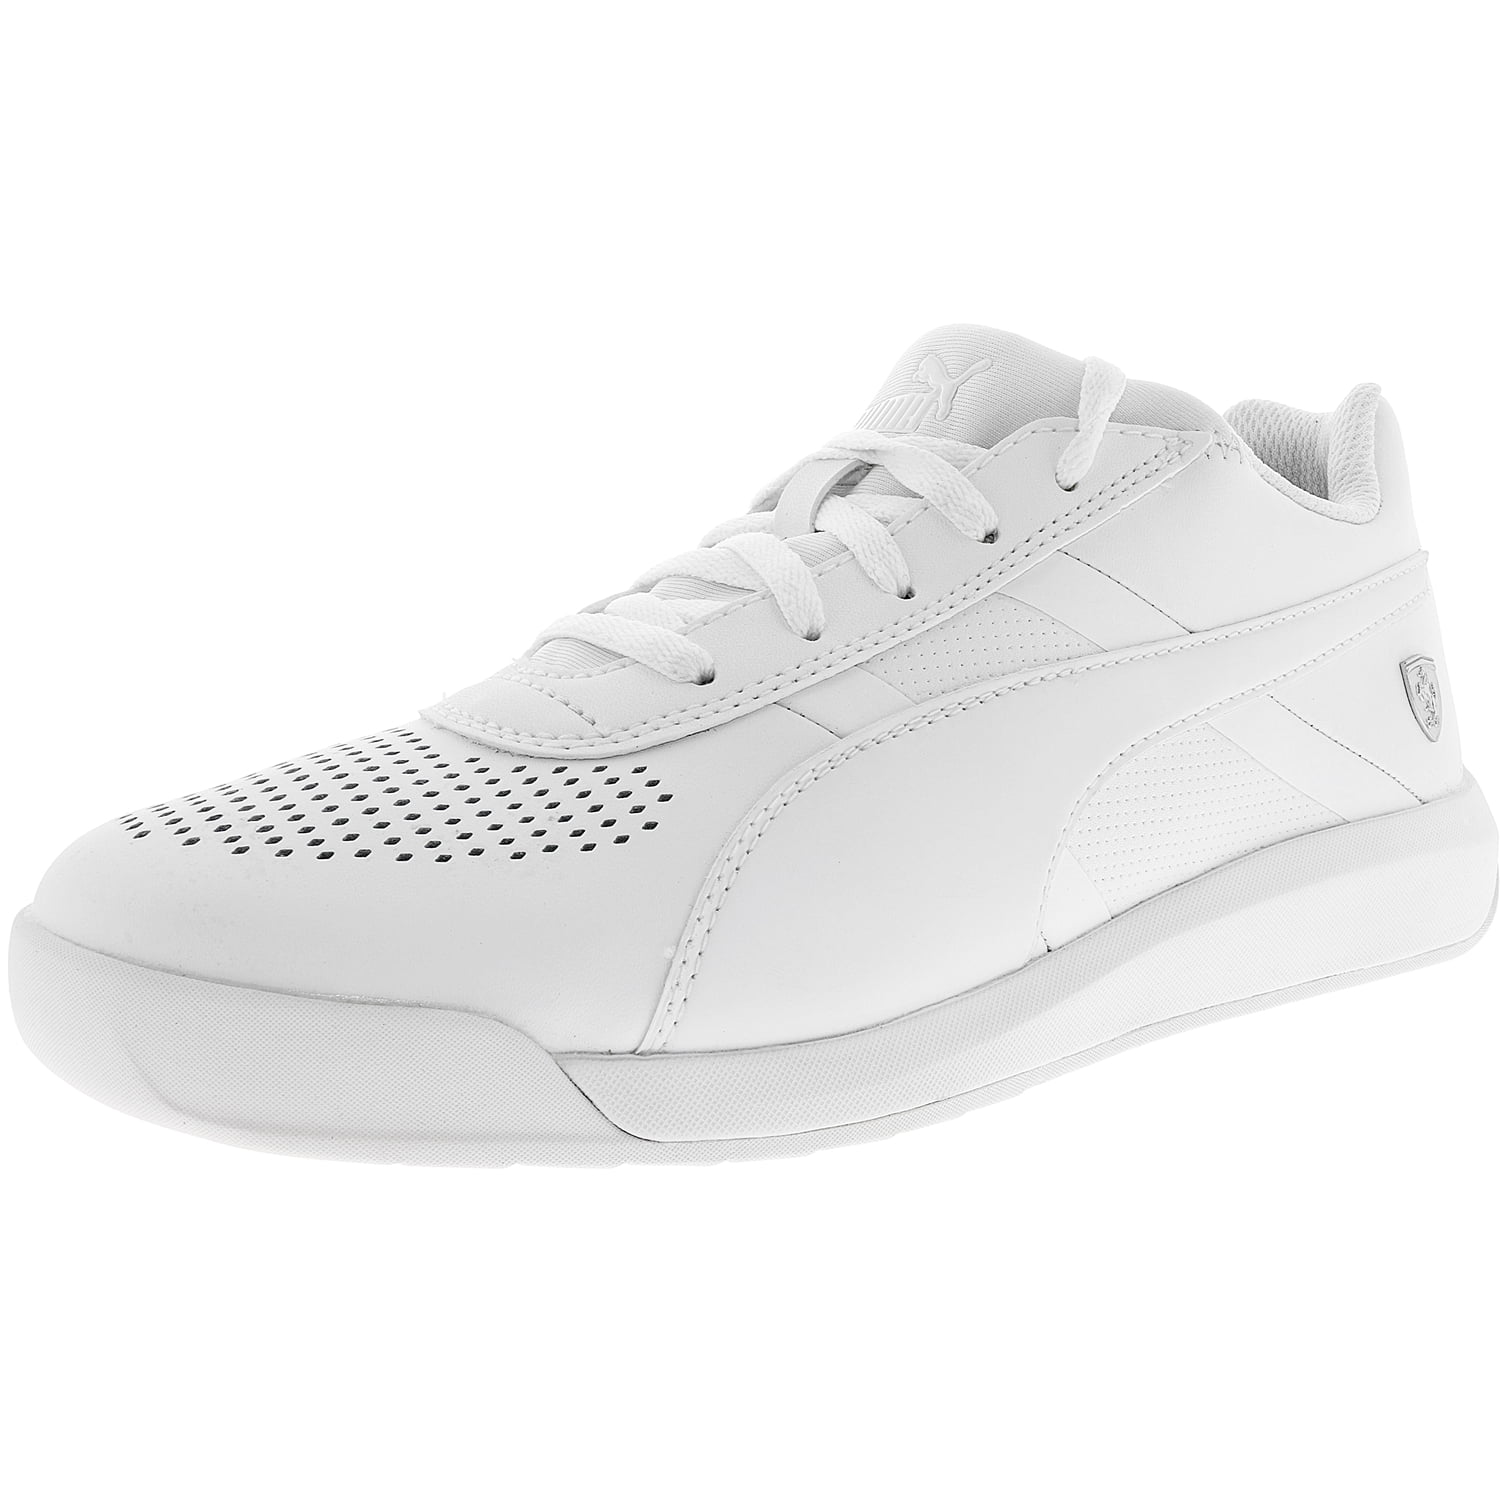 Puma Women's Podio Td Sf White-White Ankle-High Leather Tennis Shoe ...